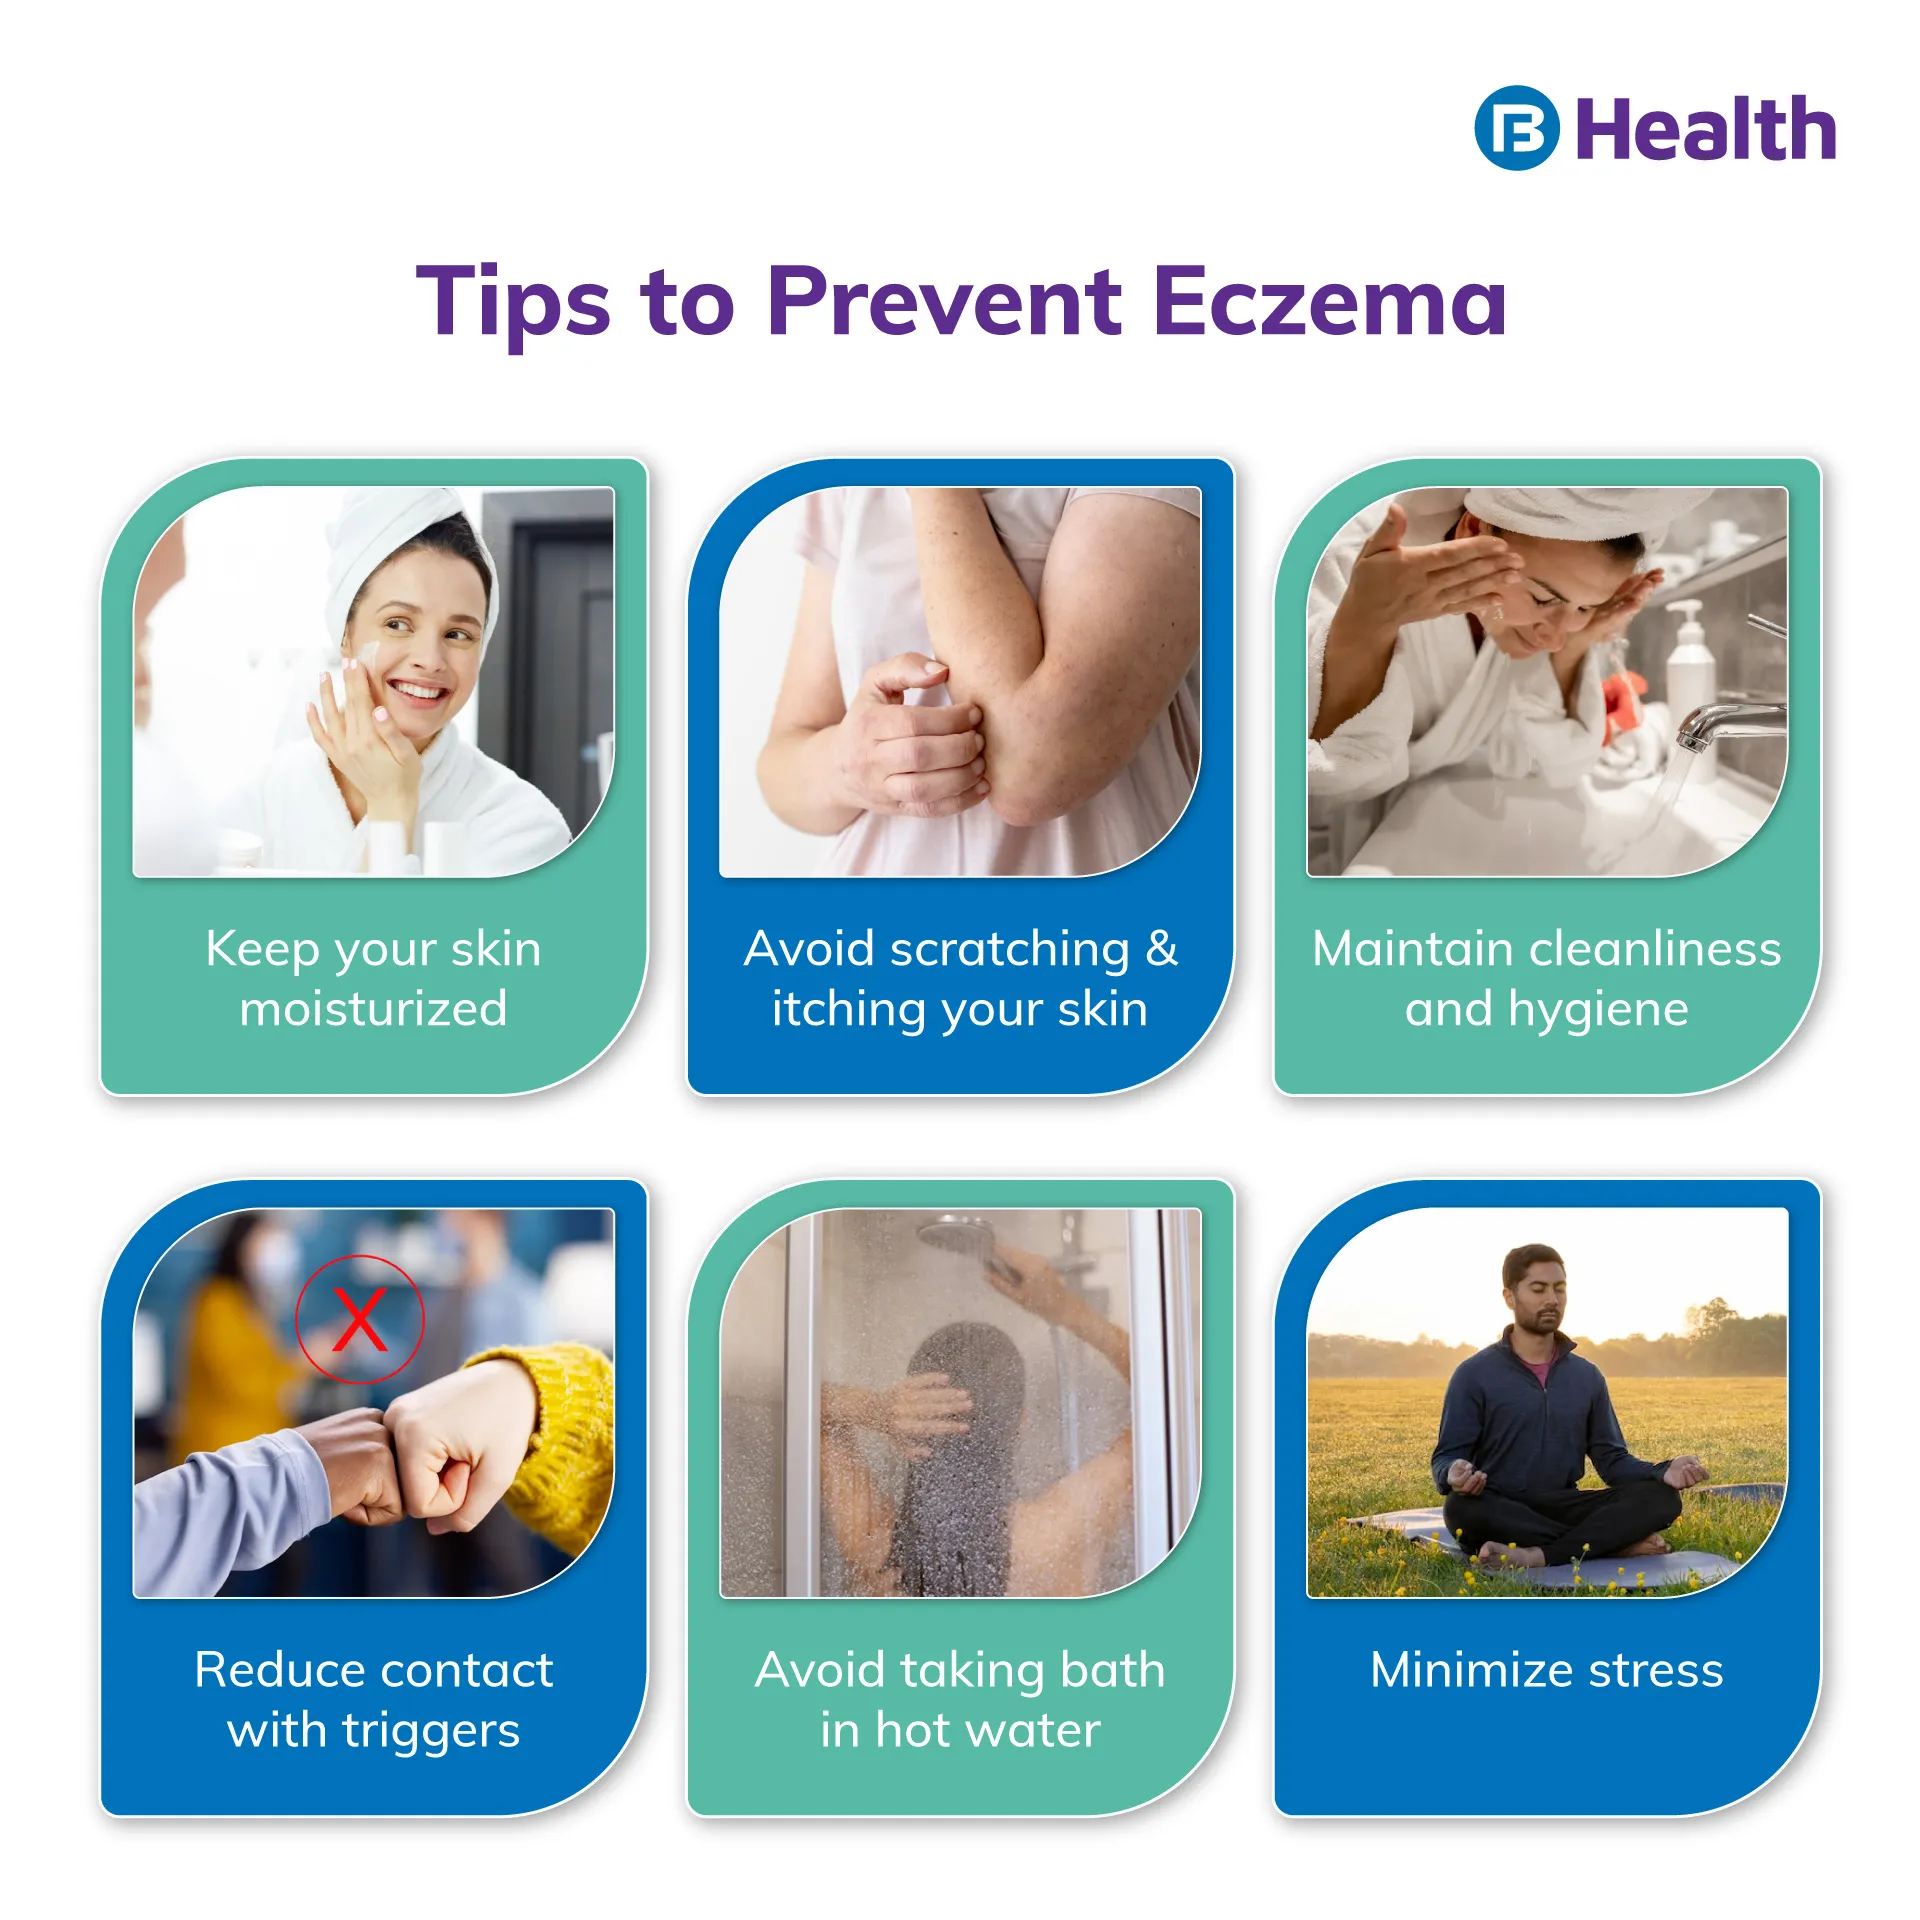 How to prevent Eczema